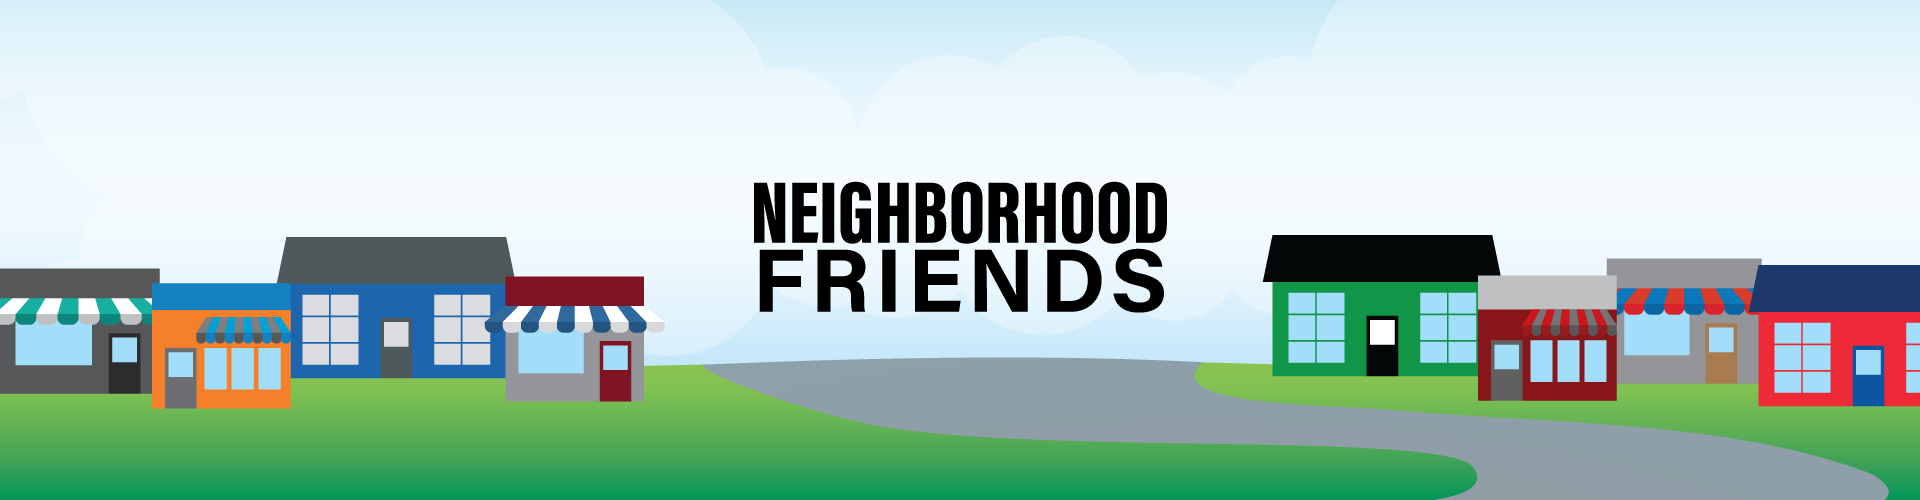 Neighborhood Friends graphic